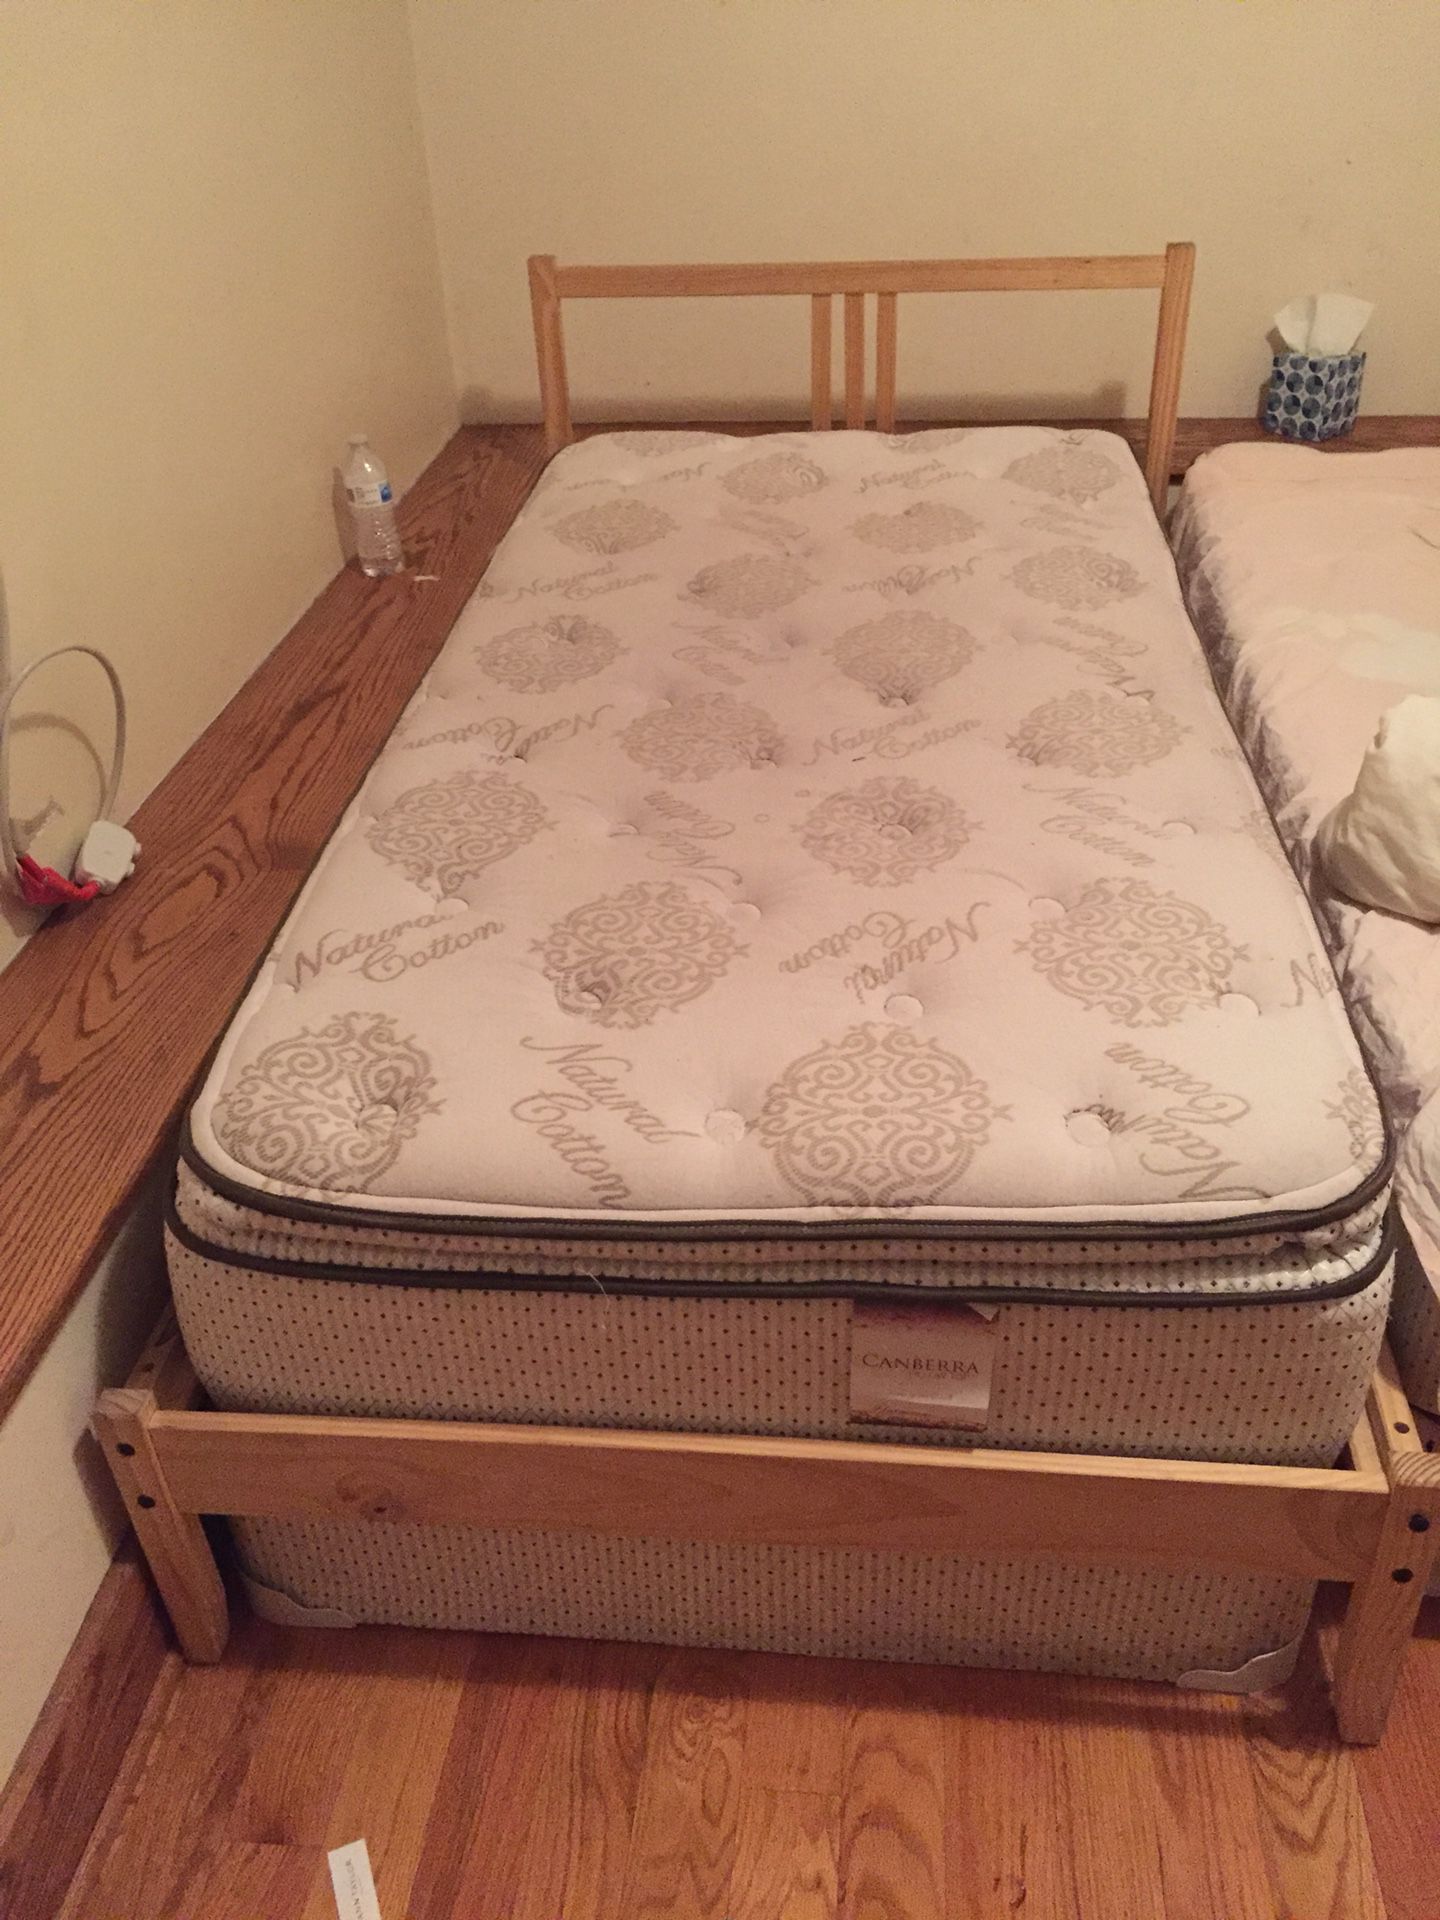 Bed box and mattress